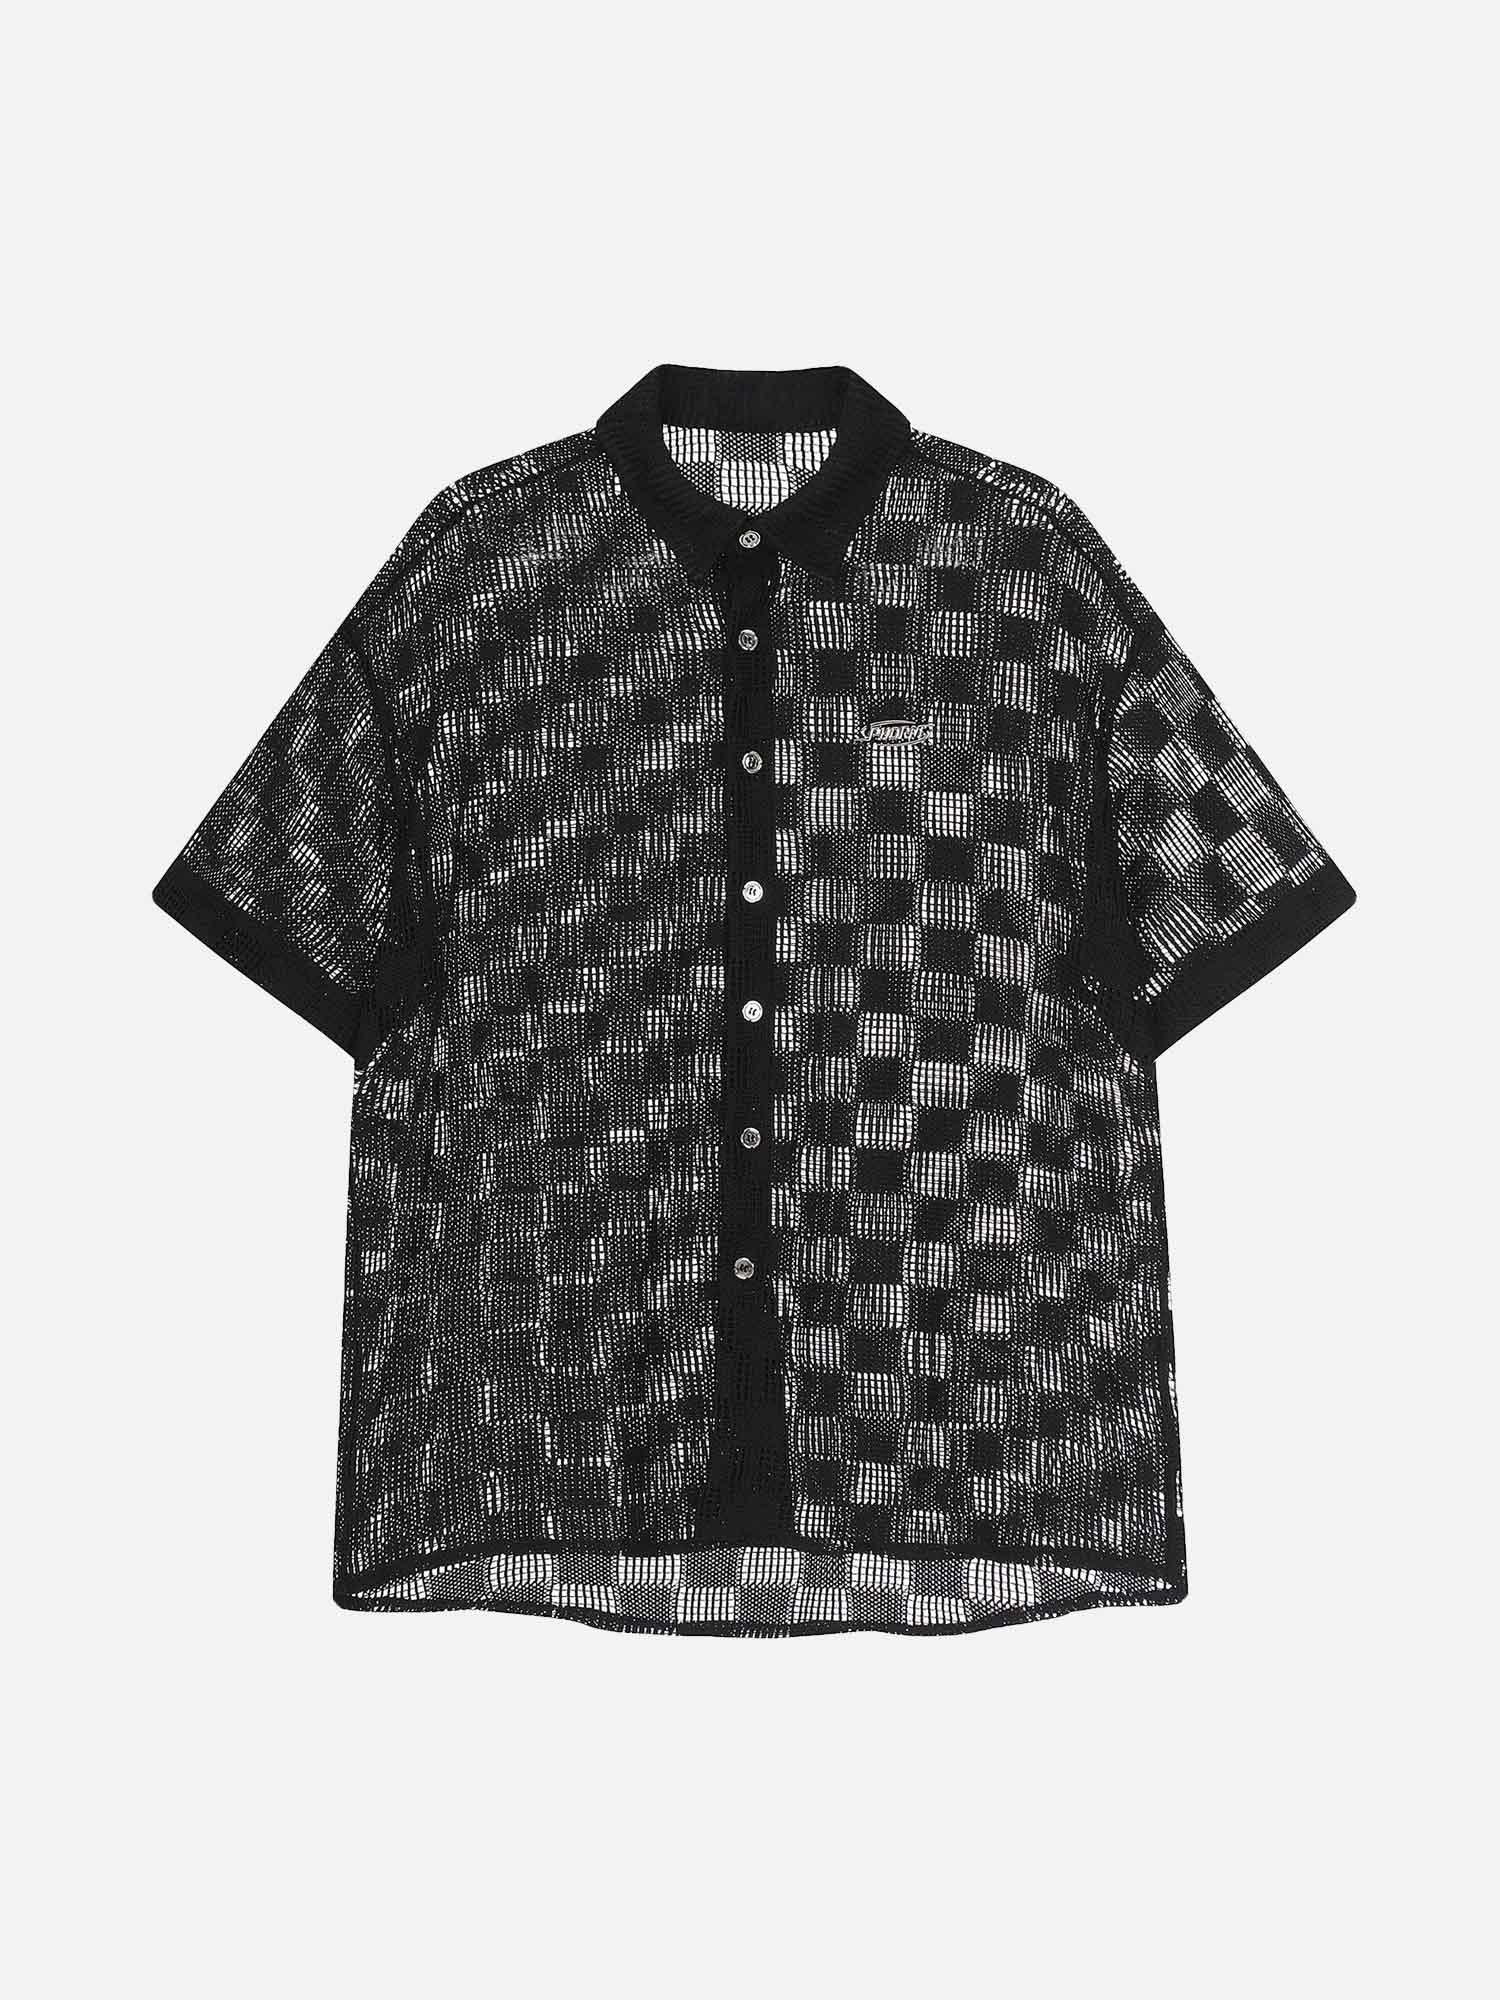 American Street Trend Checkered Hollow Shirt